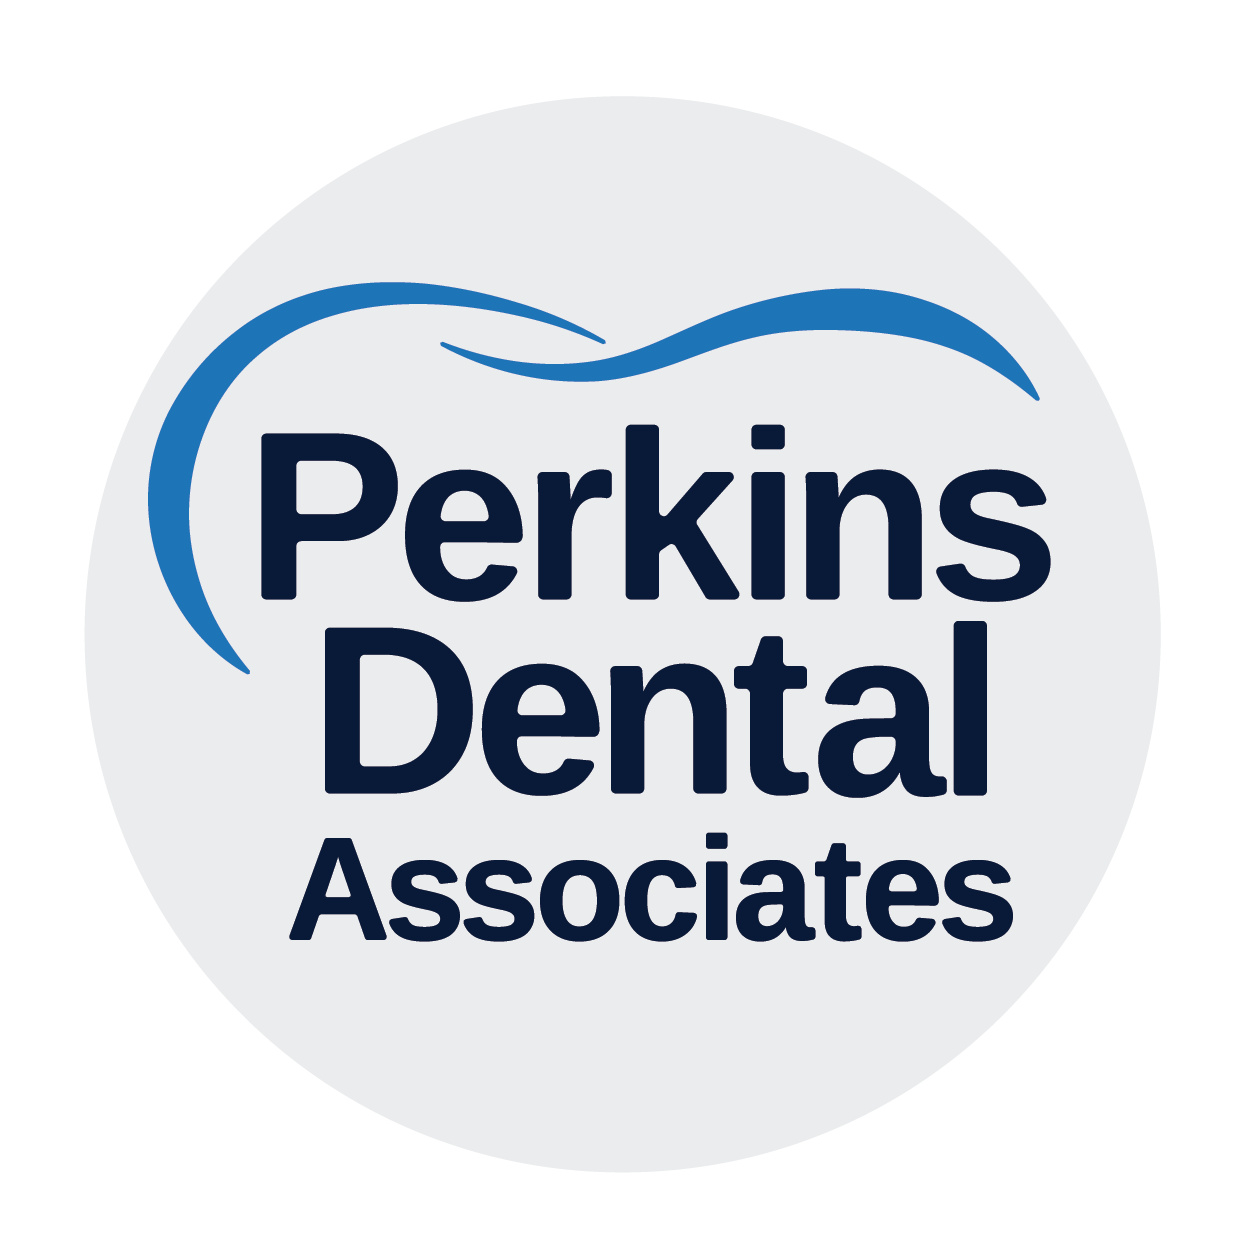 Perkins Dental Associates social logo